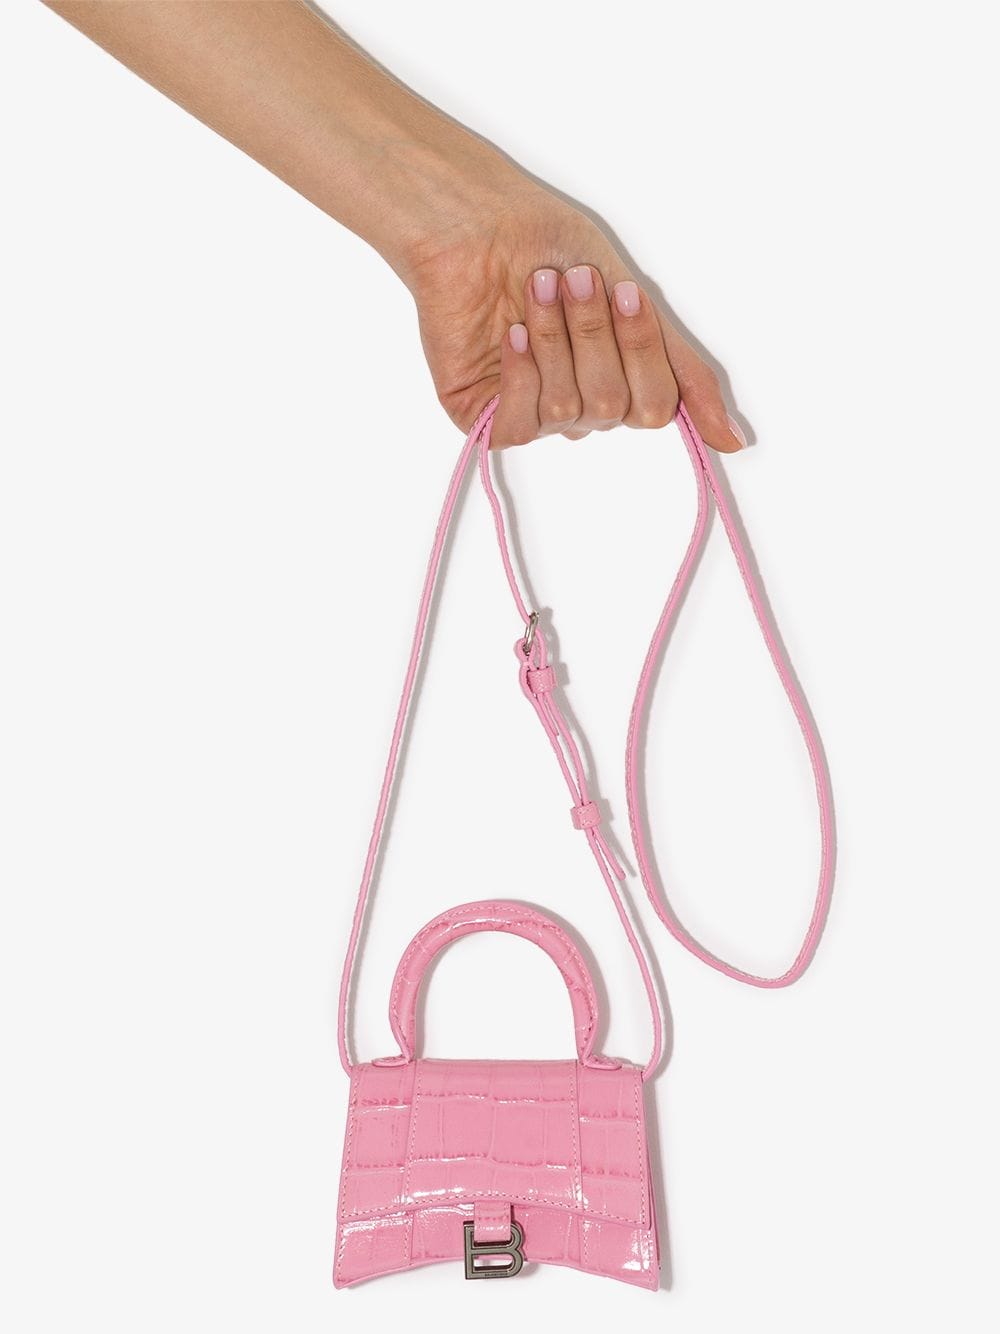 Balenciaga Hourglass Mock Croc Leather Mini Bag - Pink